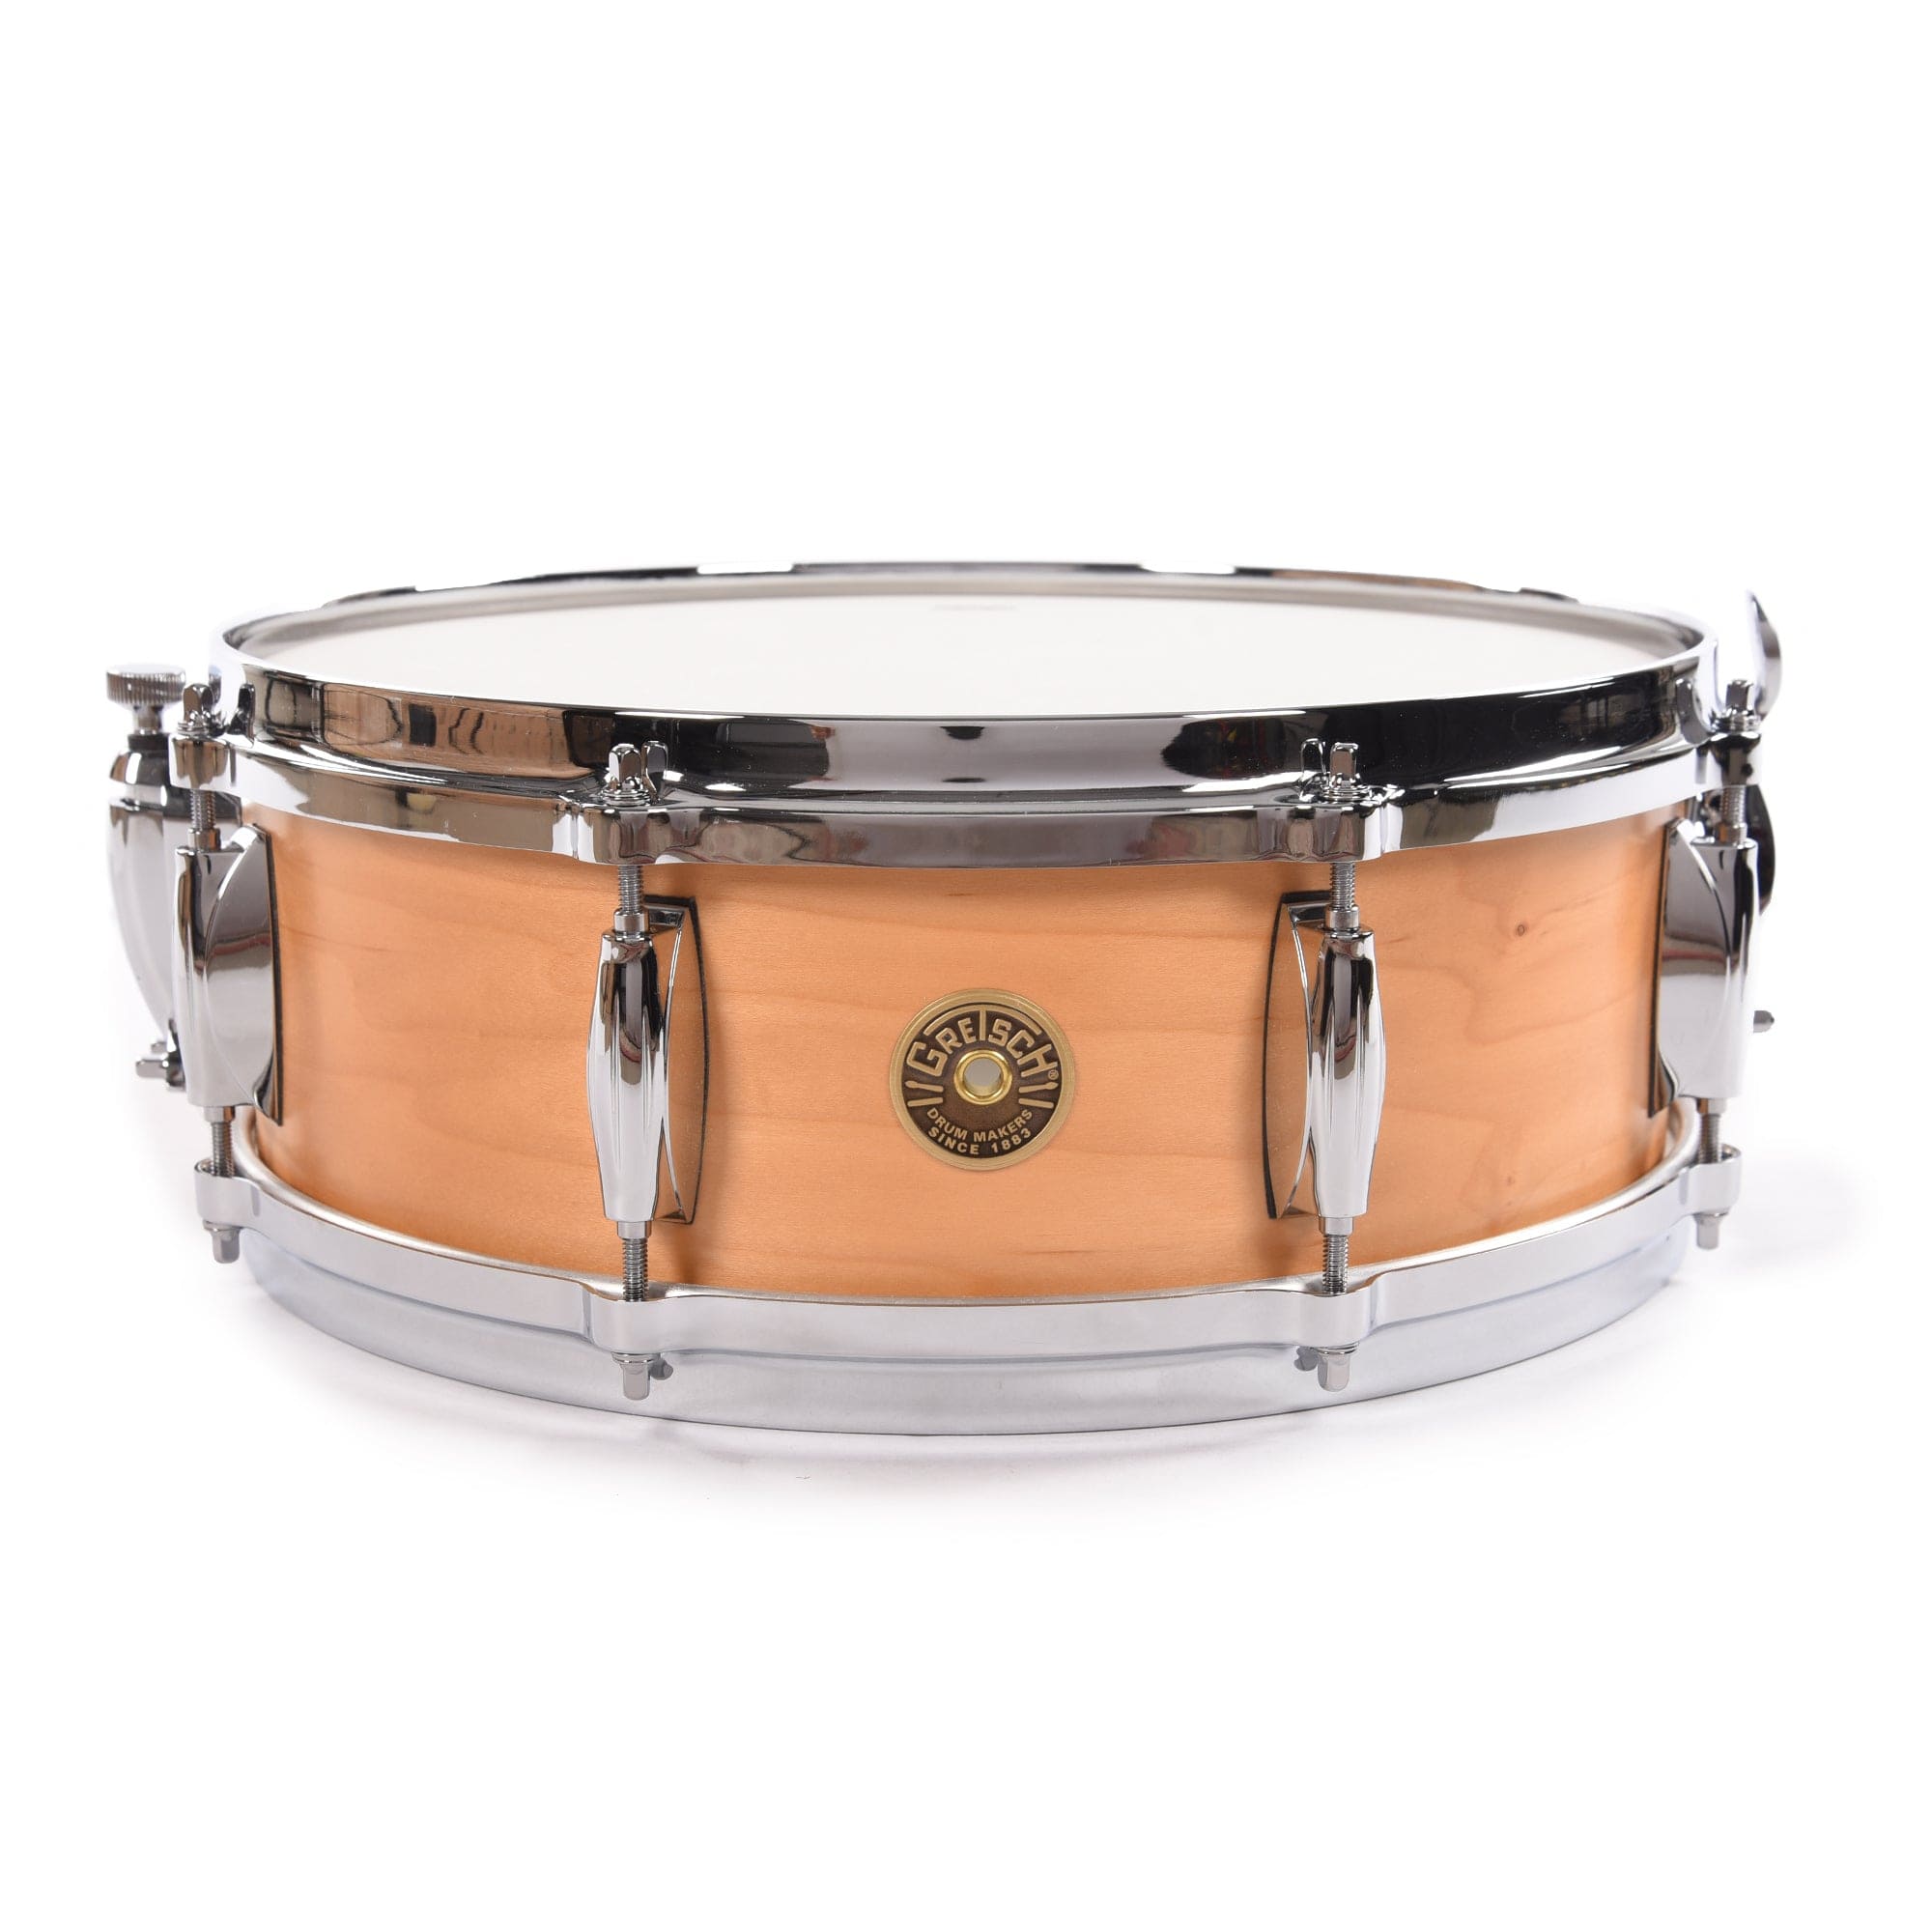 GRETSCH USA Custom Ridgeland Snare Drum - Satin Natrual